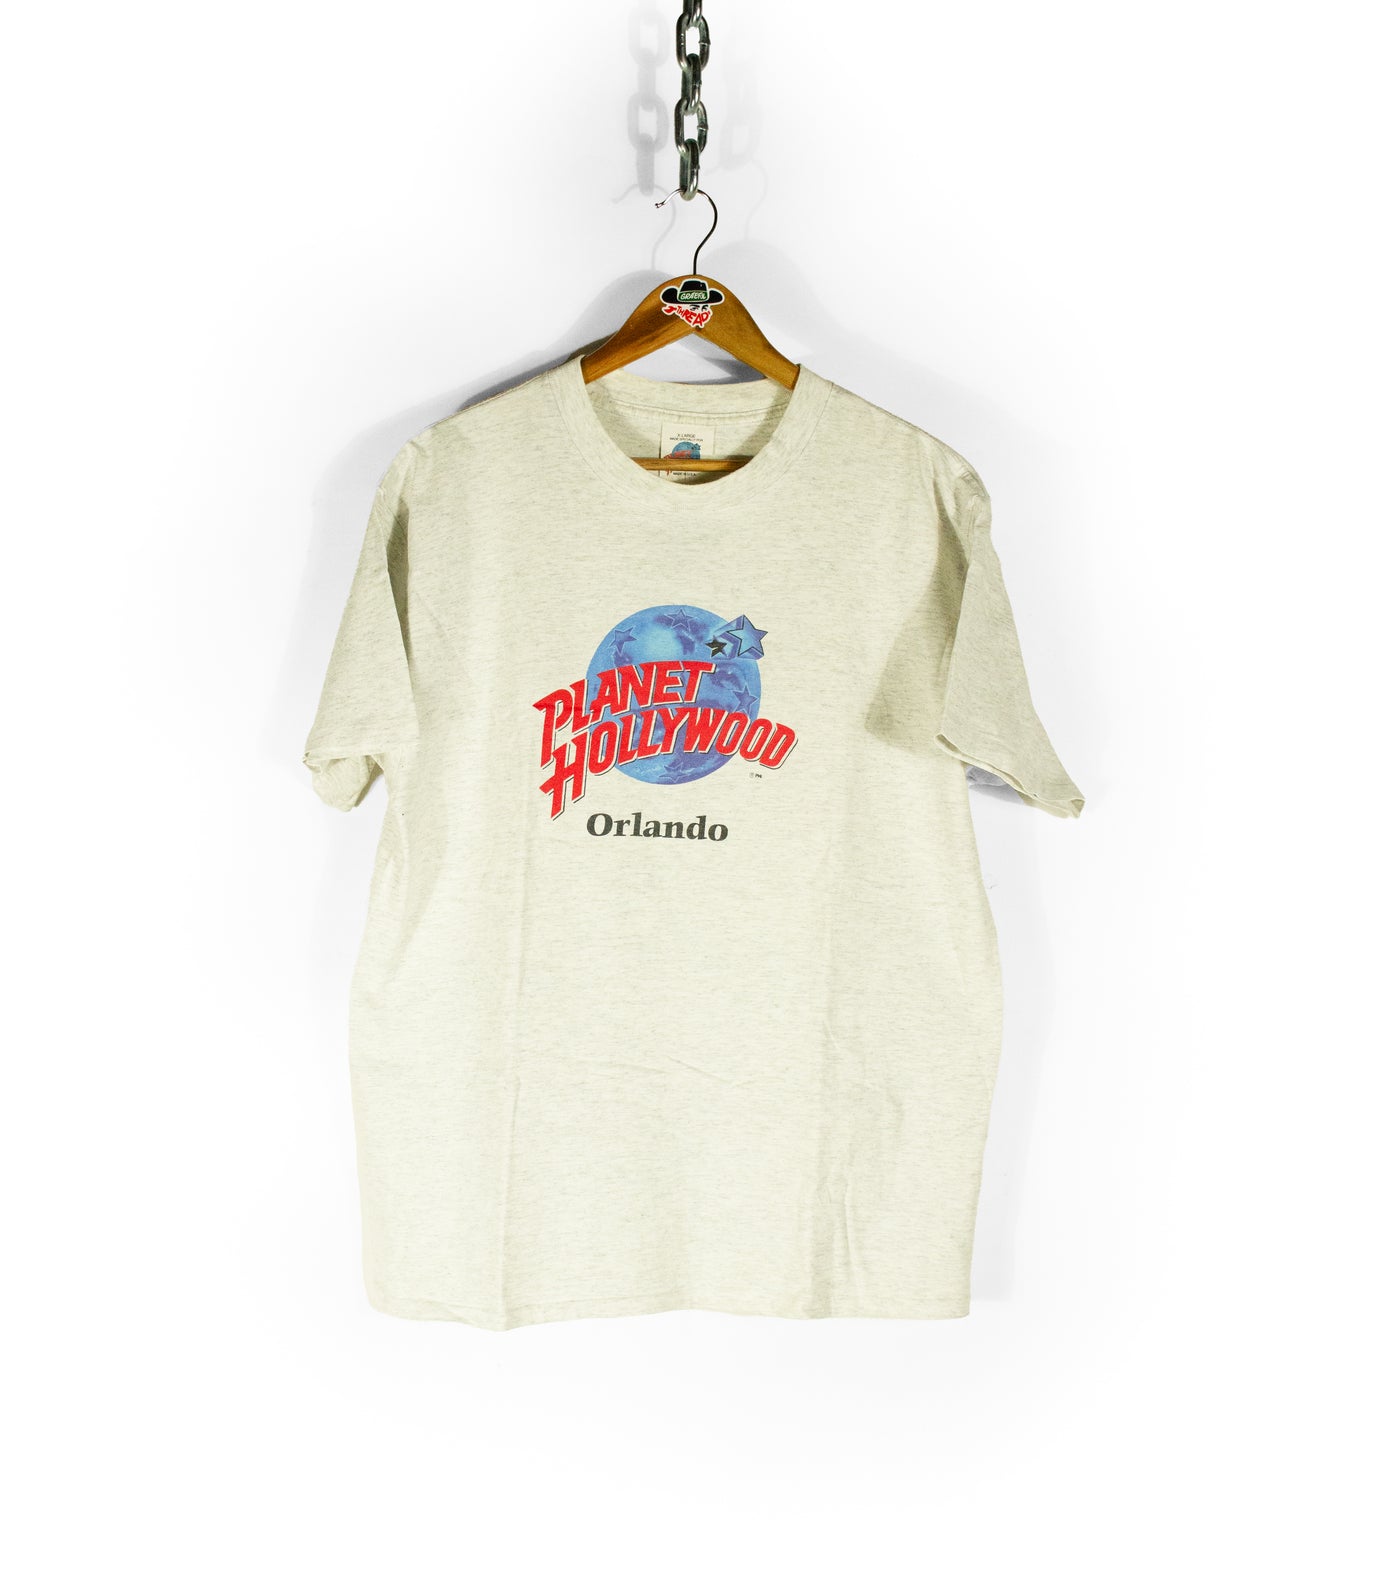 Vintage 90s Planet Hollywood Orlando T-Shirt